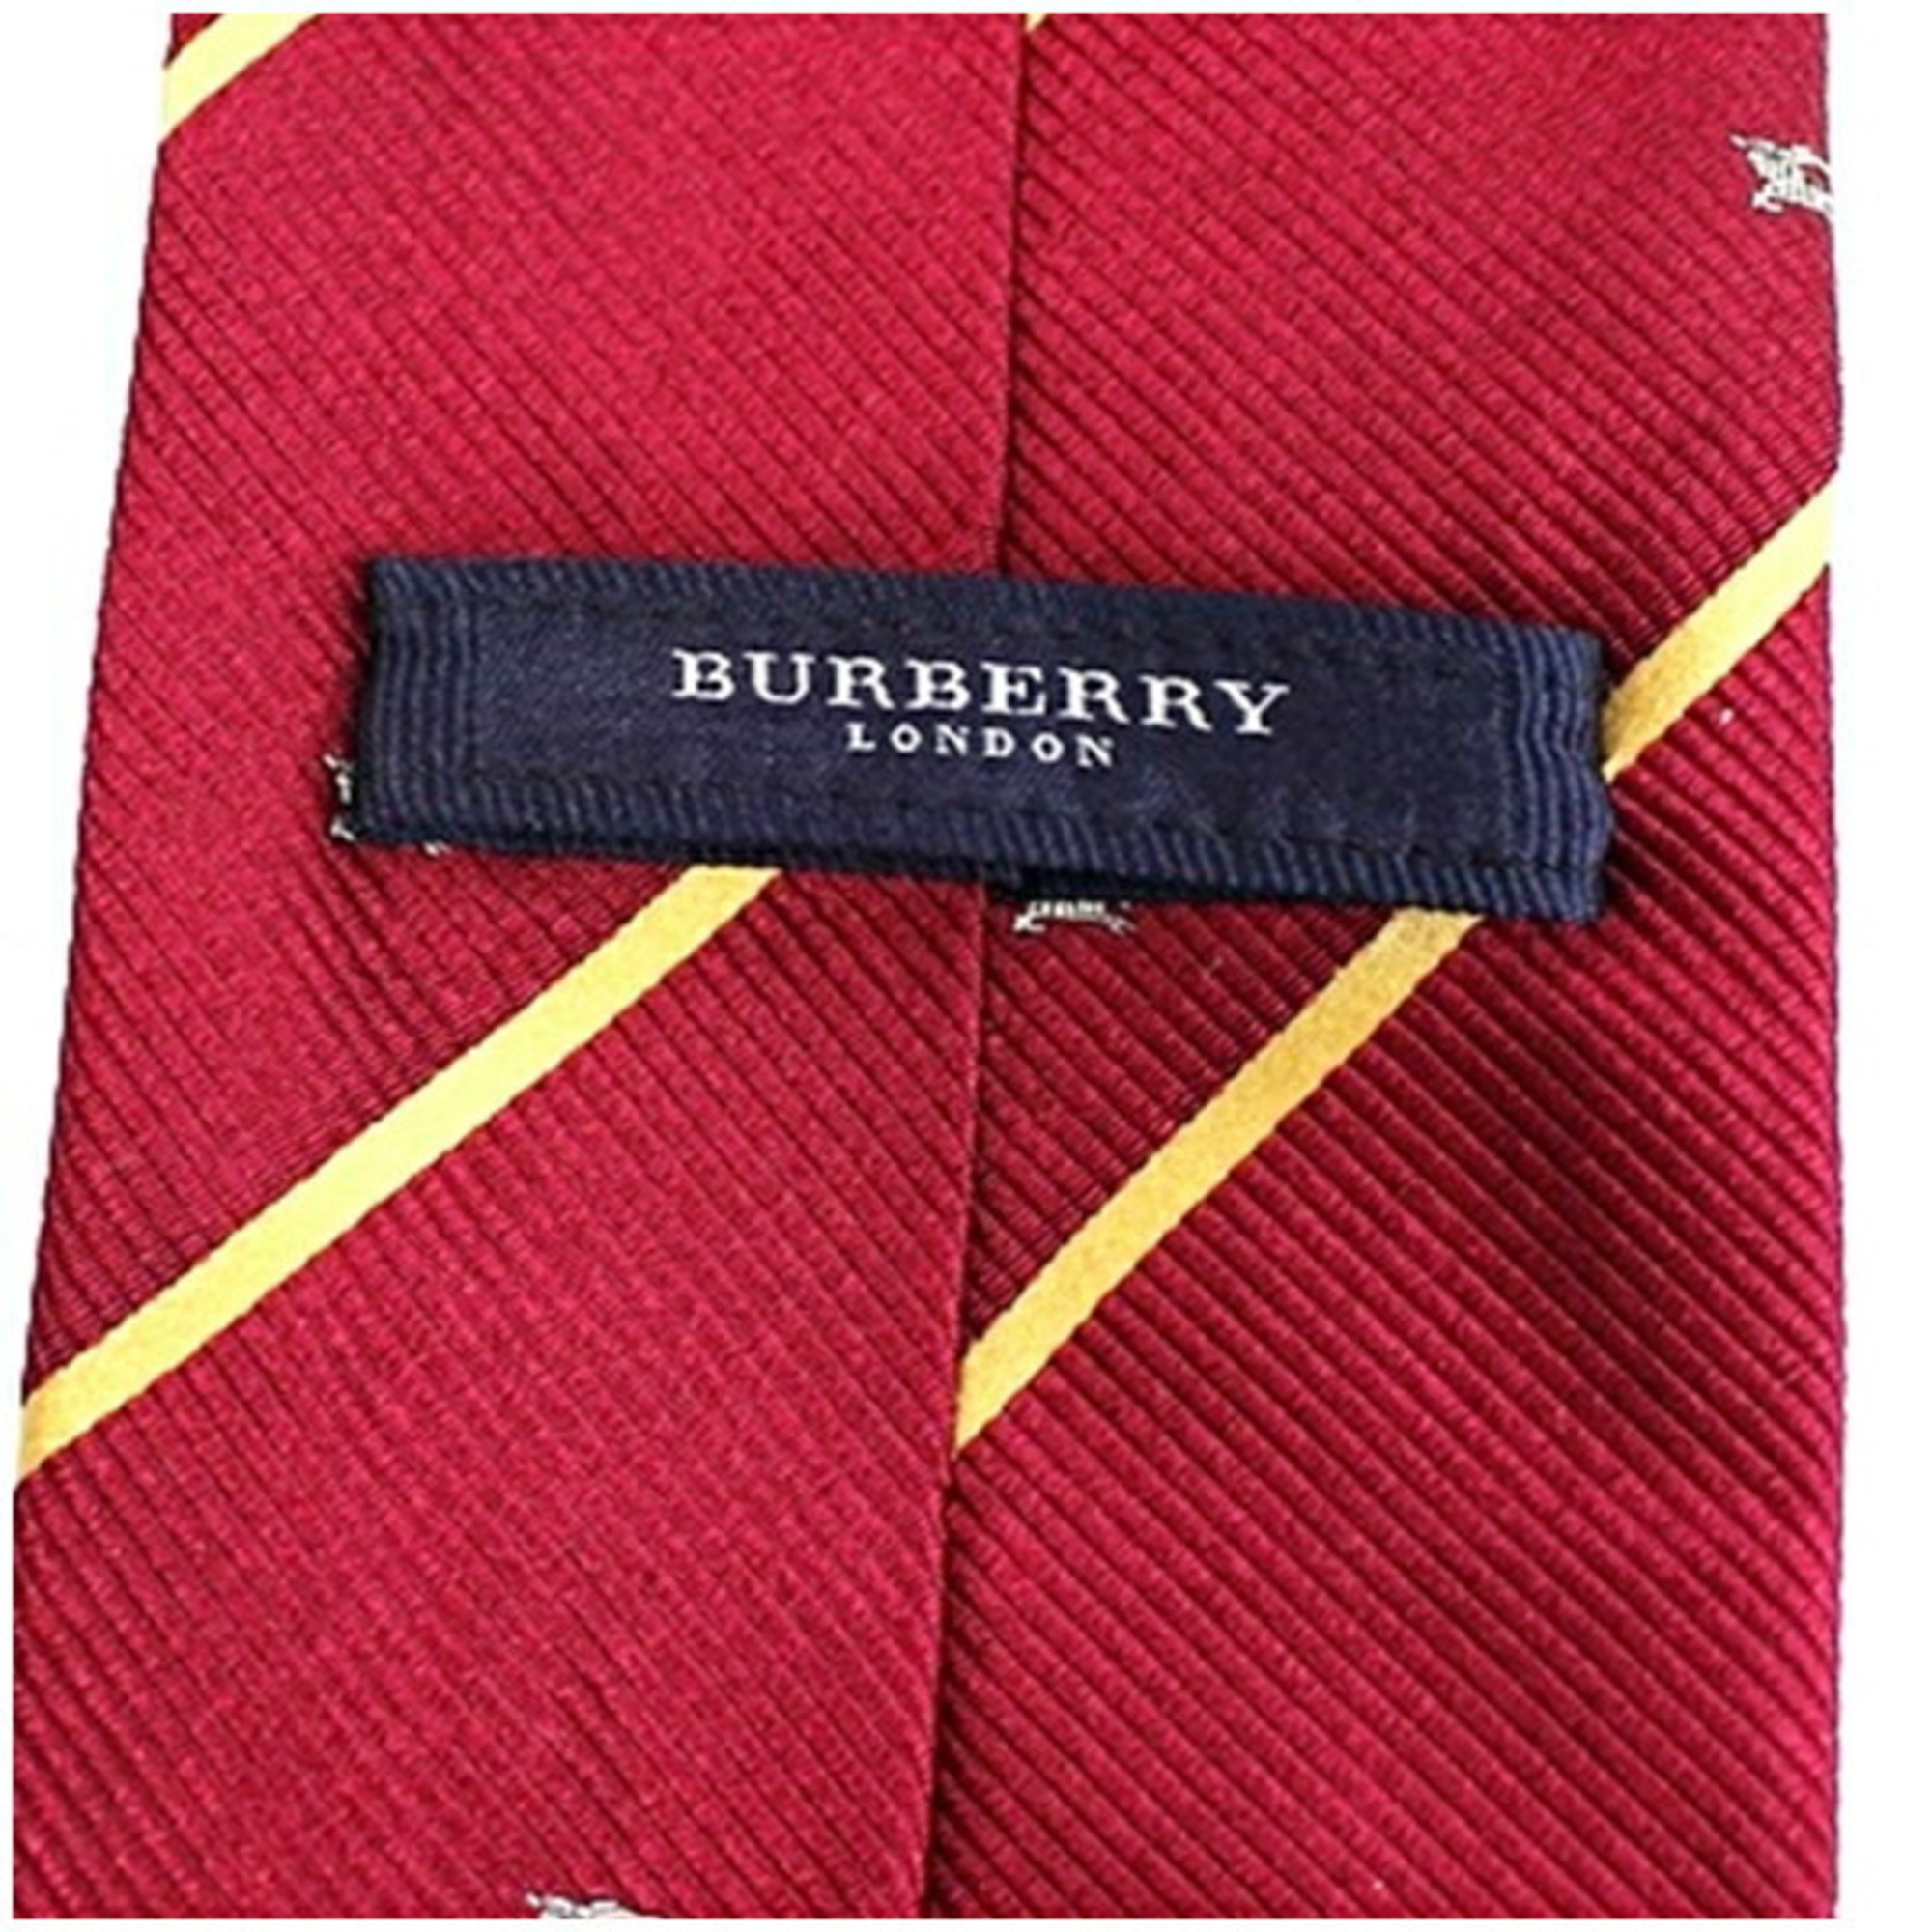 Burberry London Silk Necktie BURBERRY LONDON Men's